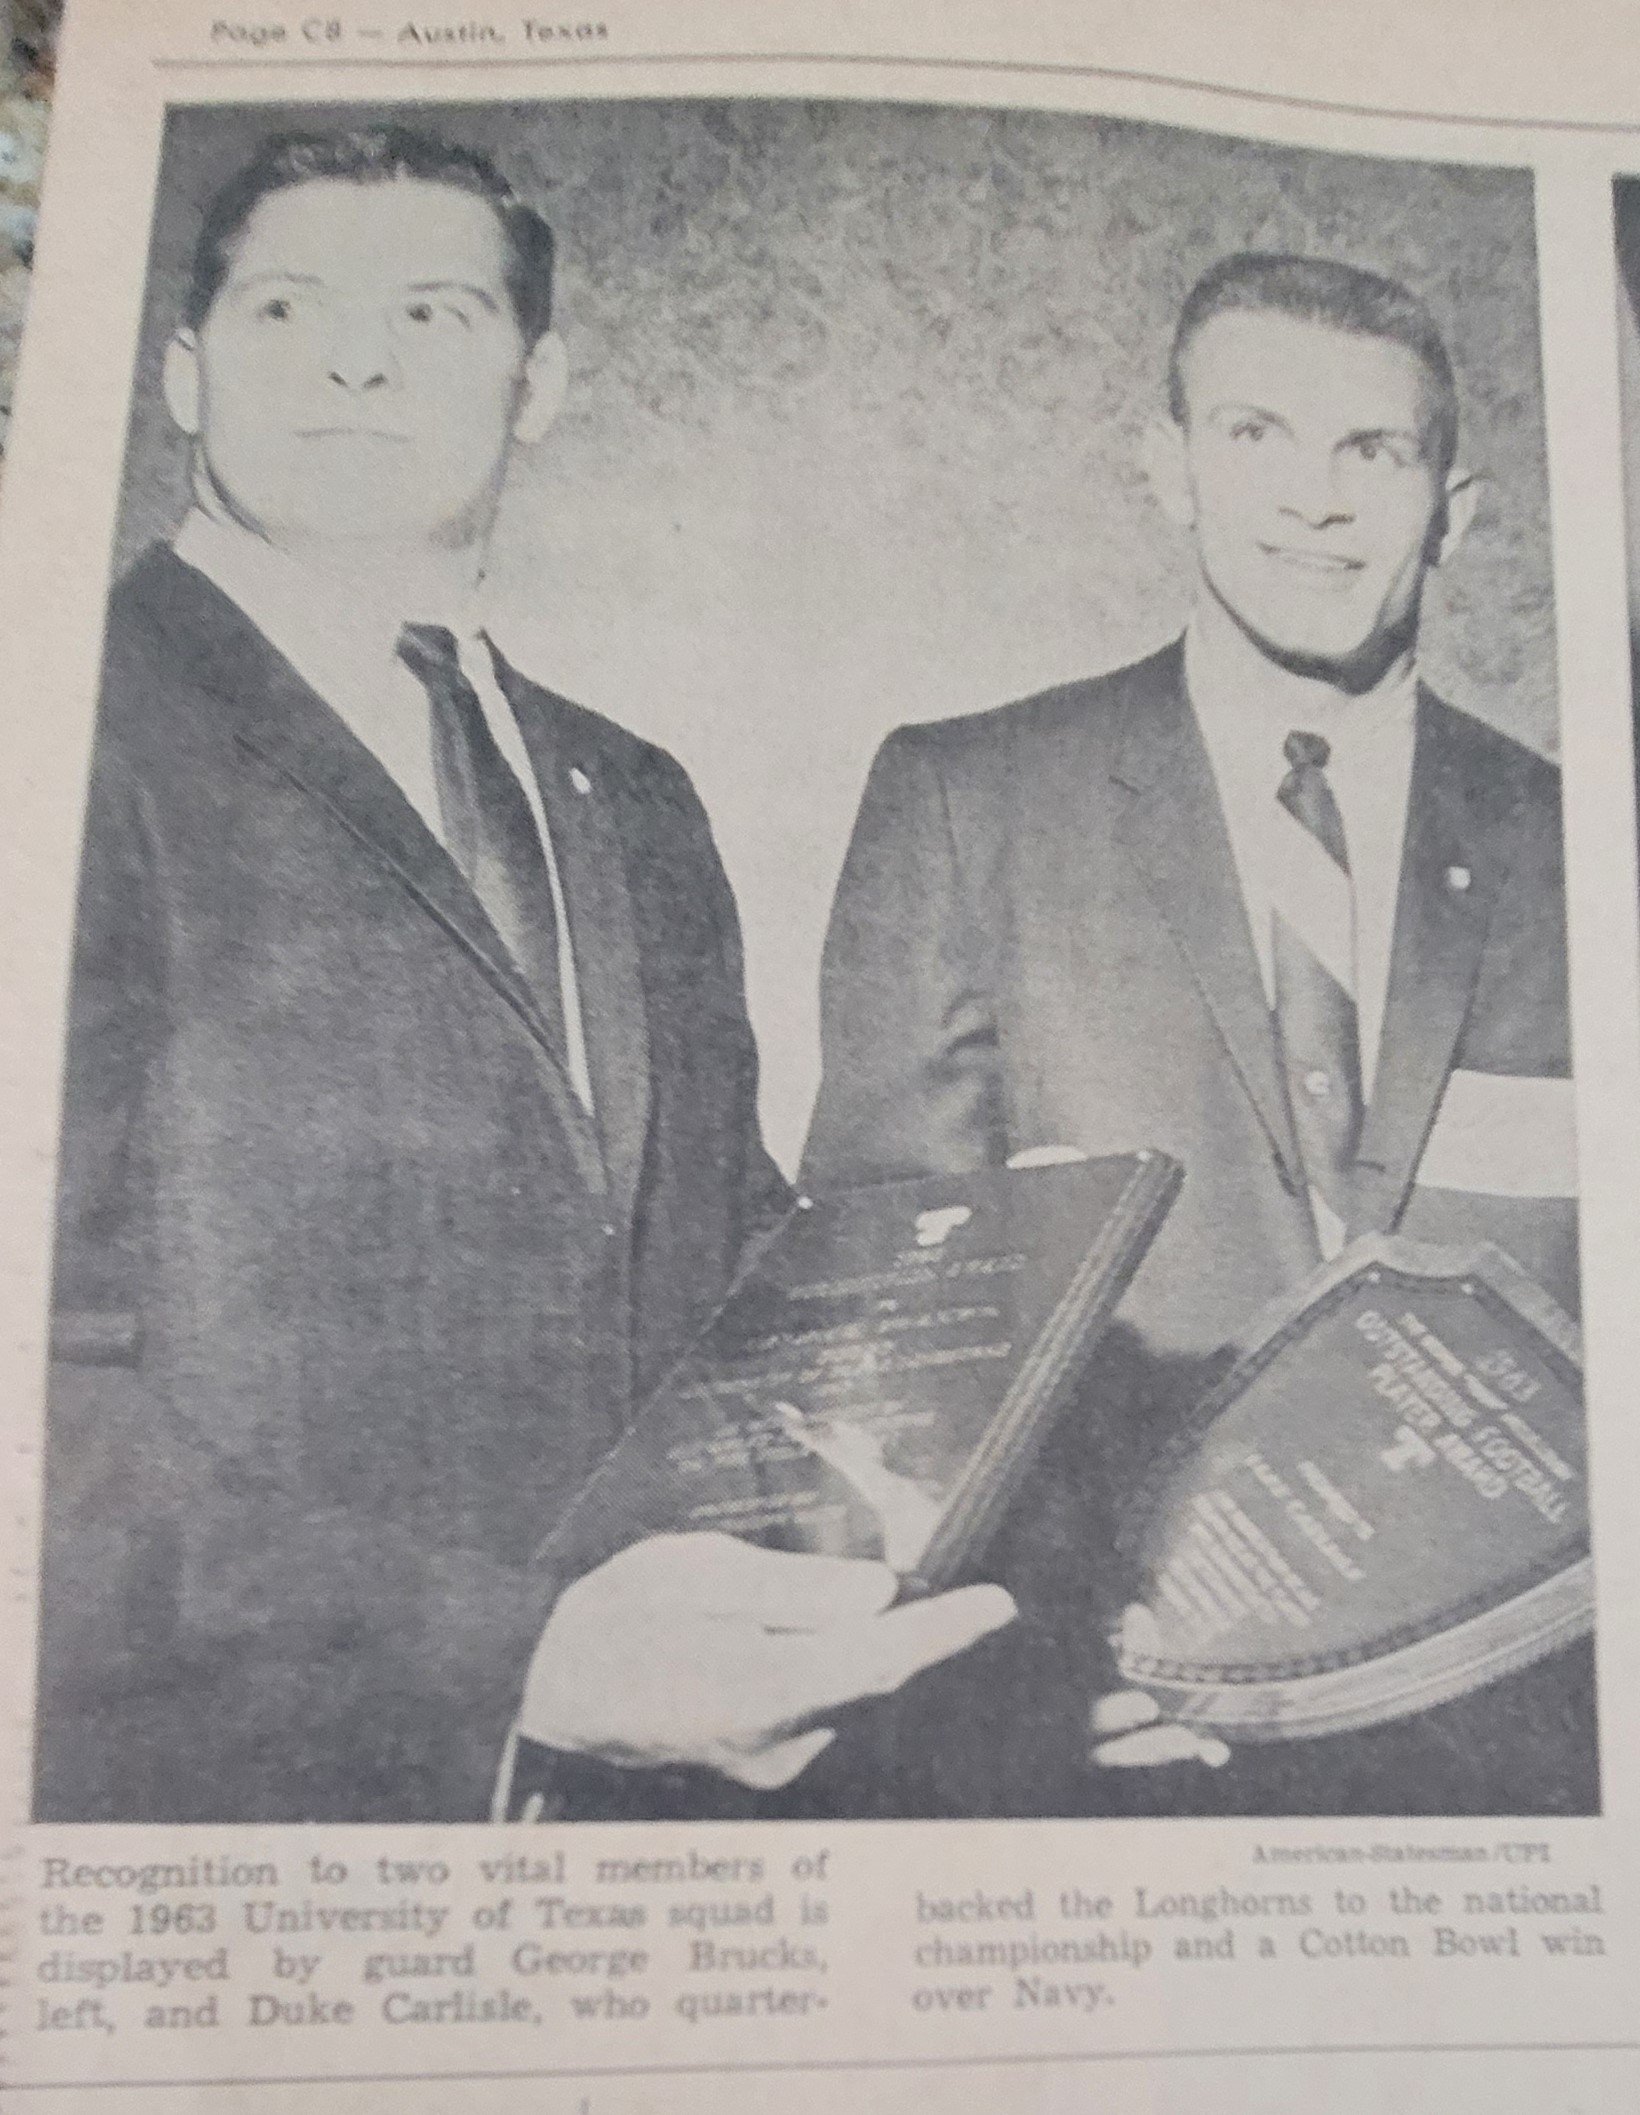 1964 recognition - george Brucks and duke Carlisle.jpg